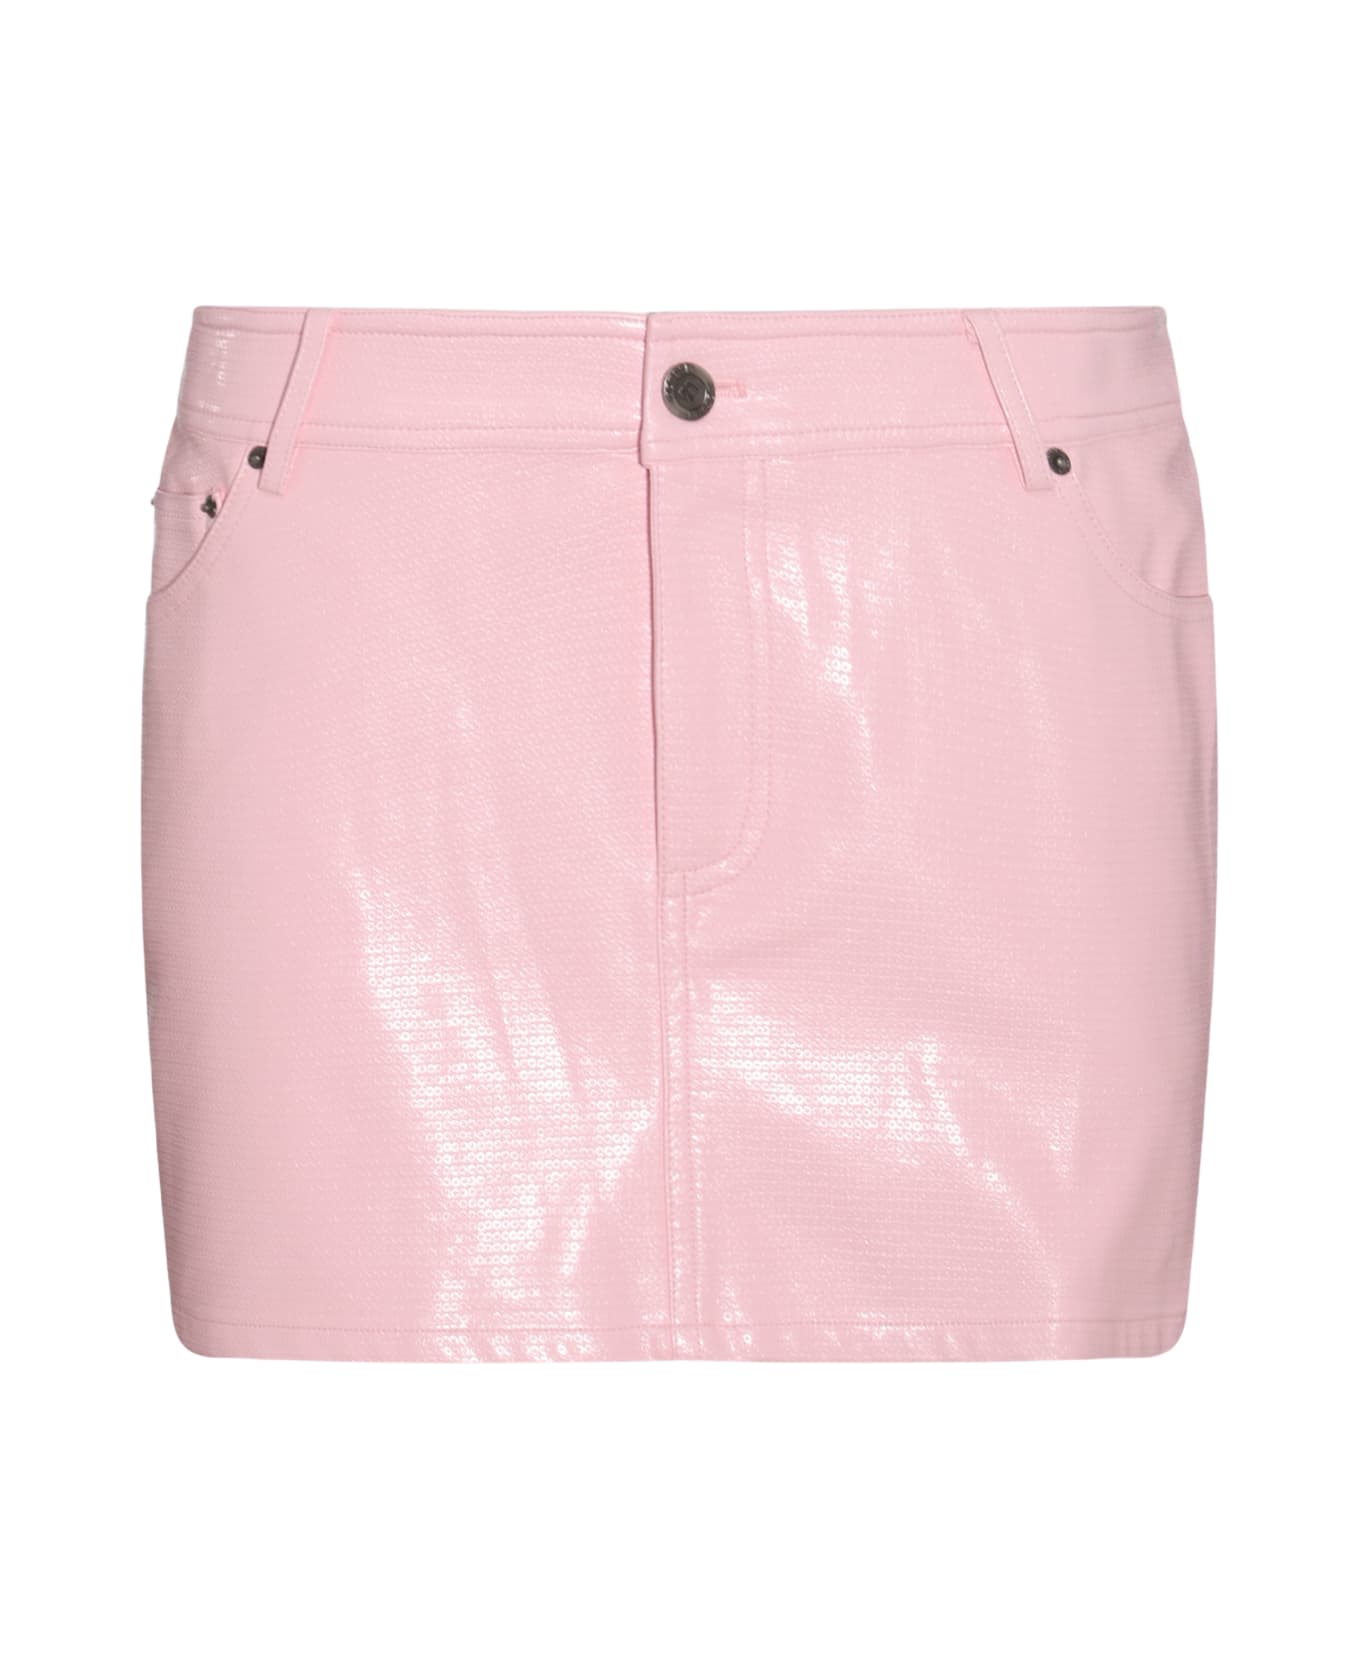 Rotate by Birger Christensen Pink Vynil Mini Skirt - Pink